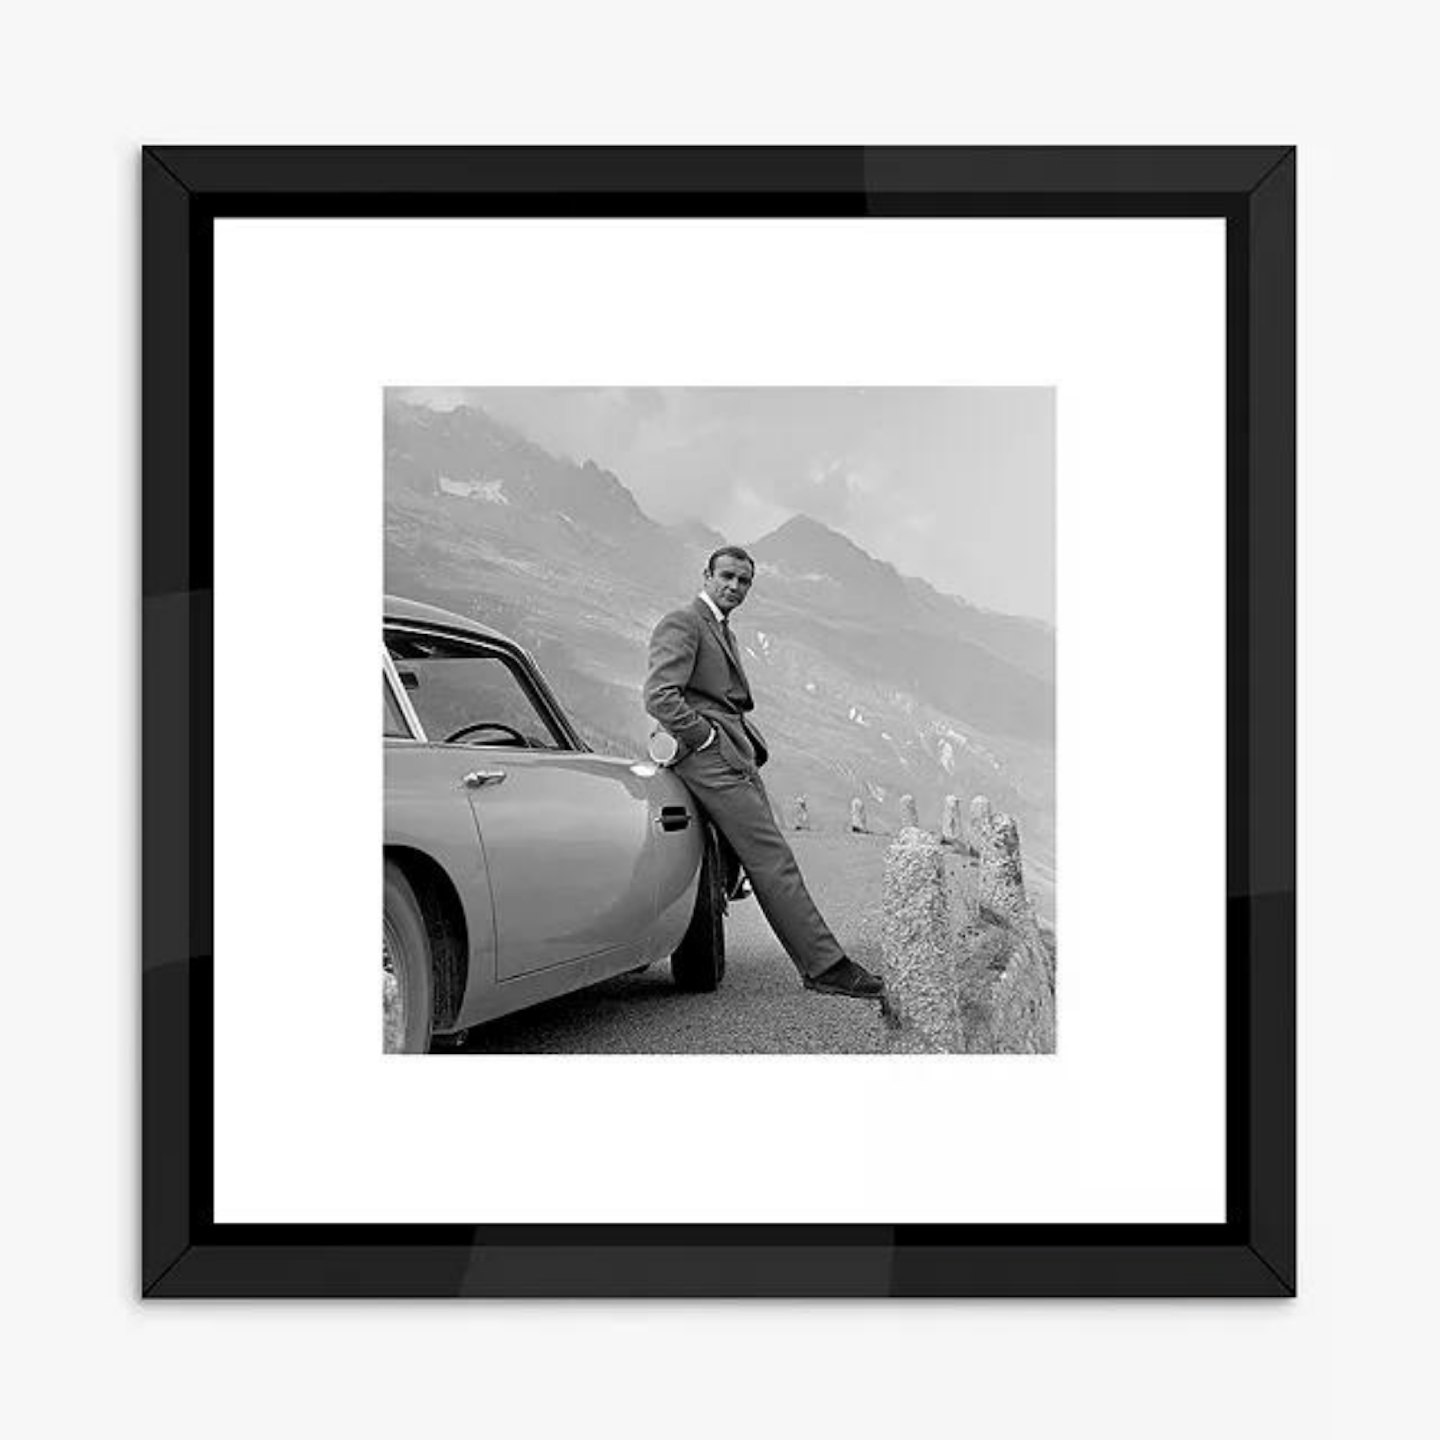 James Bond Aston Martin - Framed Print & Mount, 45.5 x 45.5cm James Bond Aston Martin - Framed Print & Mount, 45.5 x 45.5cm James Bond Aston Martin - Framed Print & Mount, 45.5 x 45.5cm James Bond Aston Martin - Framed Print & Mount, 45.5 x 45.5cm James Bond Aston Martin - Framed Print & Mount, 45.5 x 45.5cm